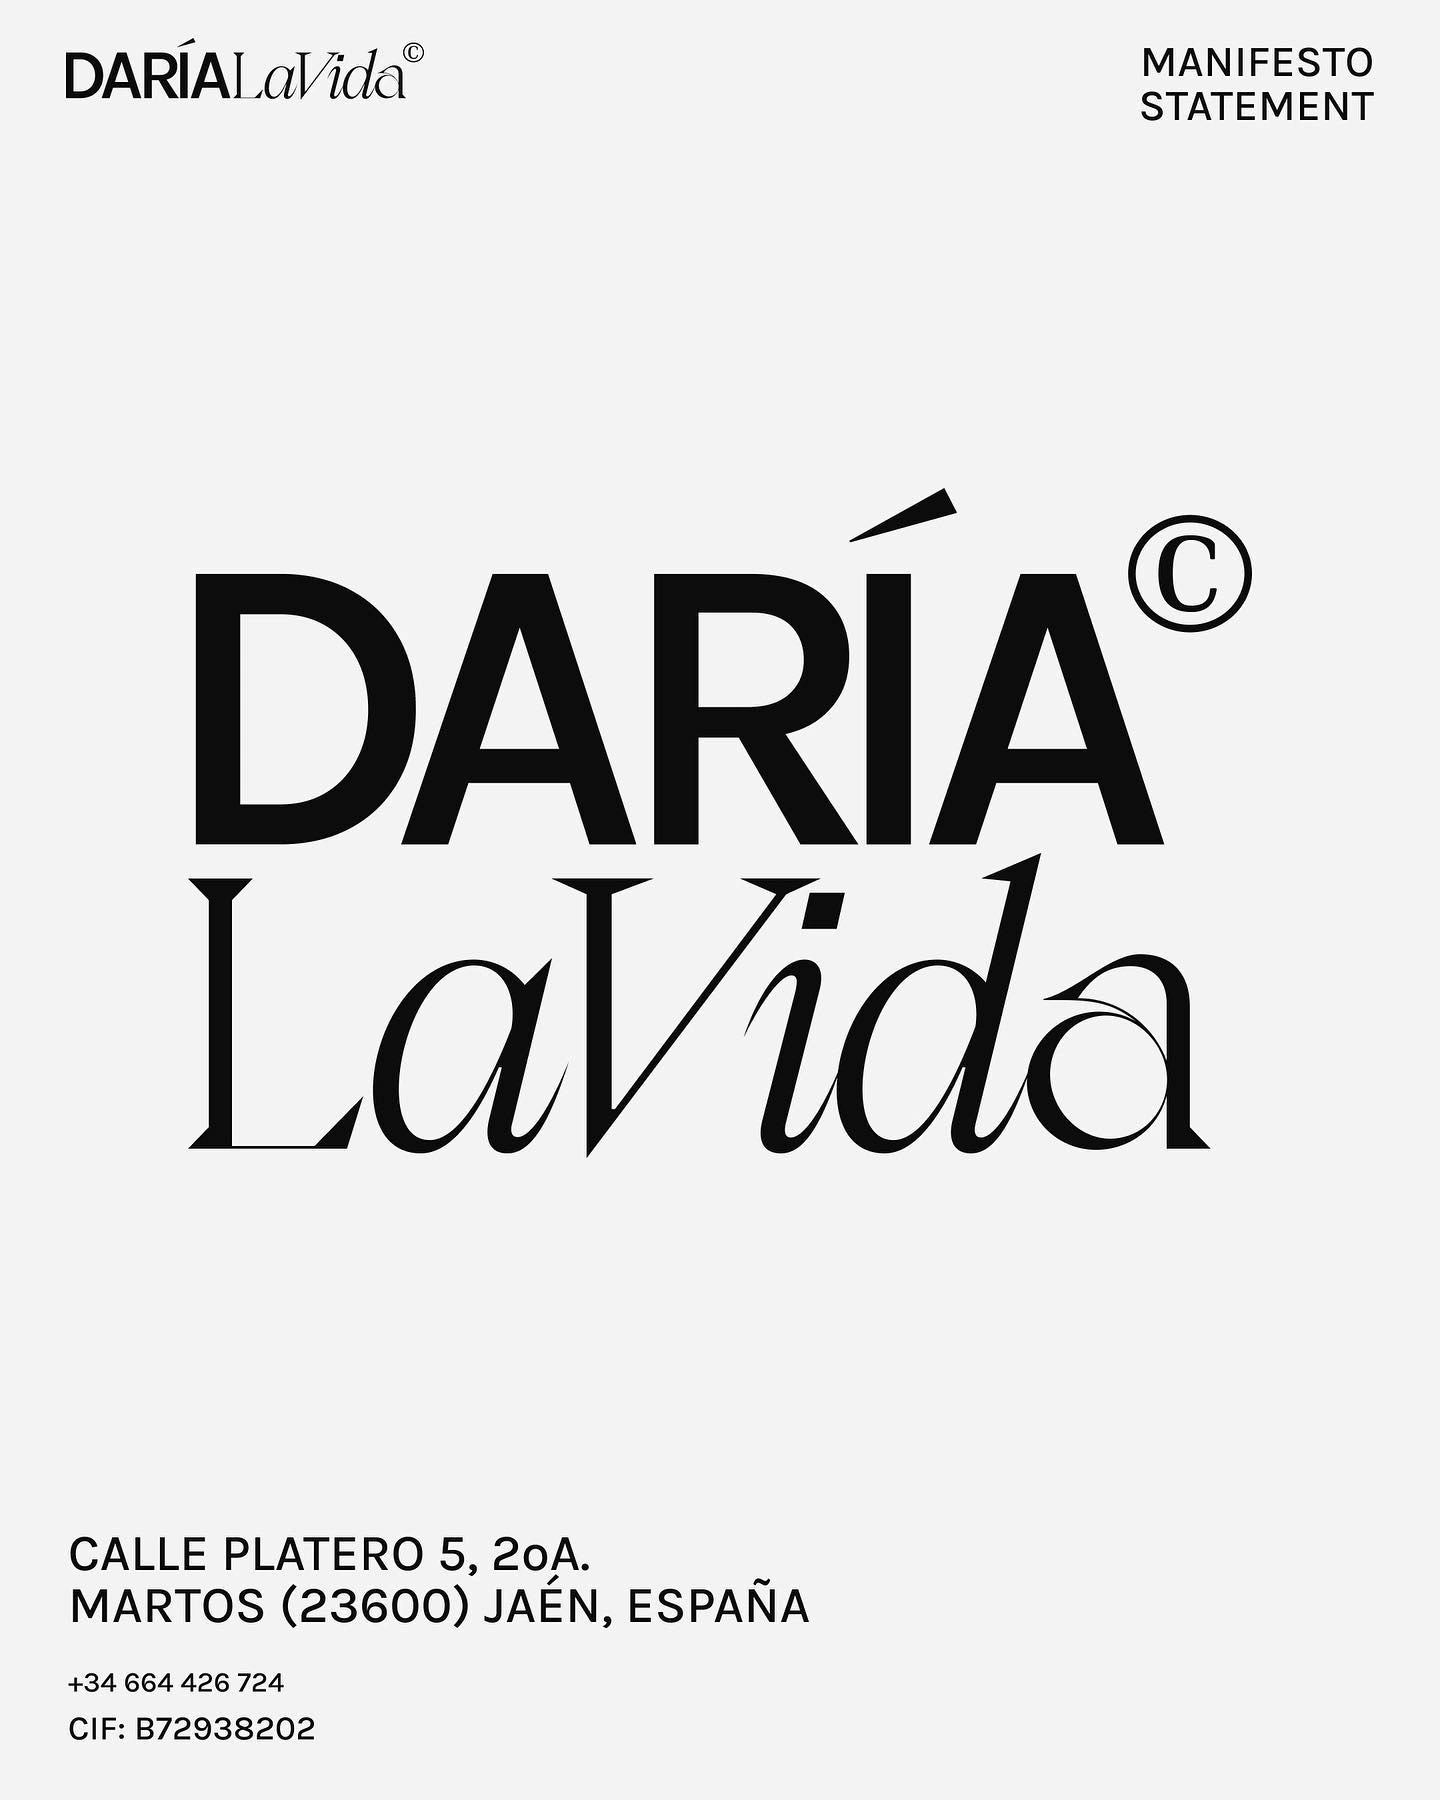 Photo by DARÍA La Vida on April 13, 2023. May be an image of poster, magazine and text that says 'DARÍALaVida® DARÍAI MANIFESTO STATEMENT DARÍA © LaVida CALLE PLATERO 5, 20A. MARTOS (23600) JAÉN, ESPAÑA +34 664 426 724 CIF: B72938202'.